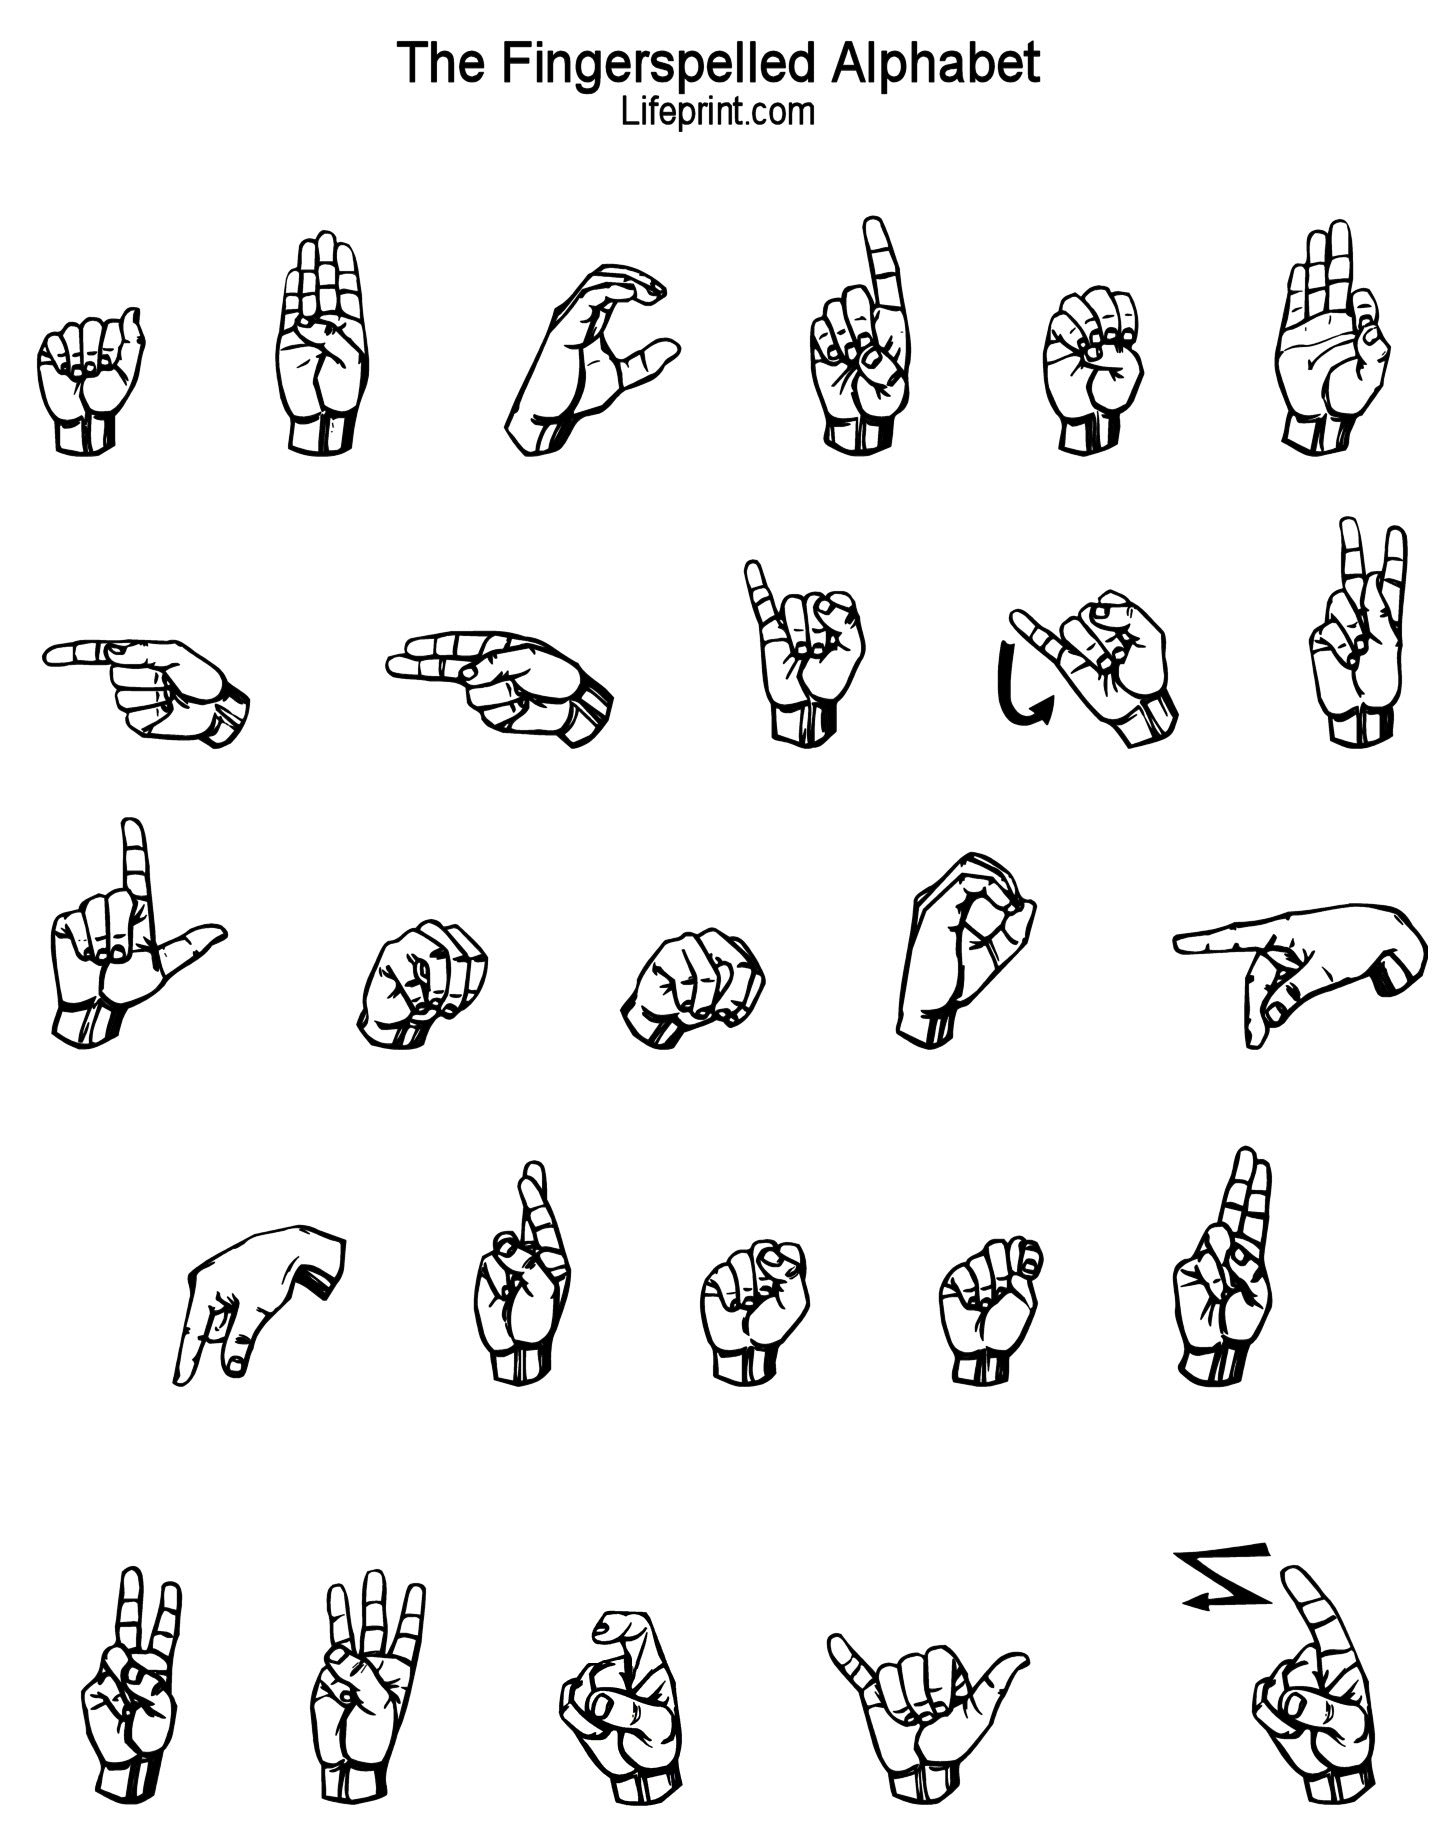 Sign Language The spanish sign language alphabet. sign language